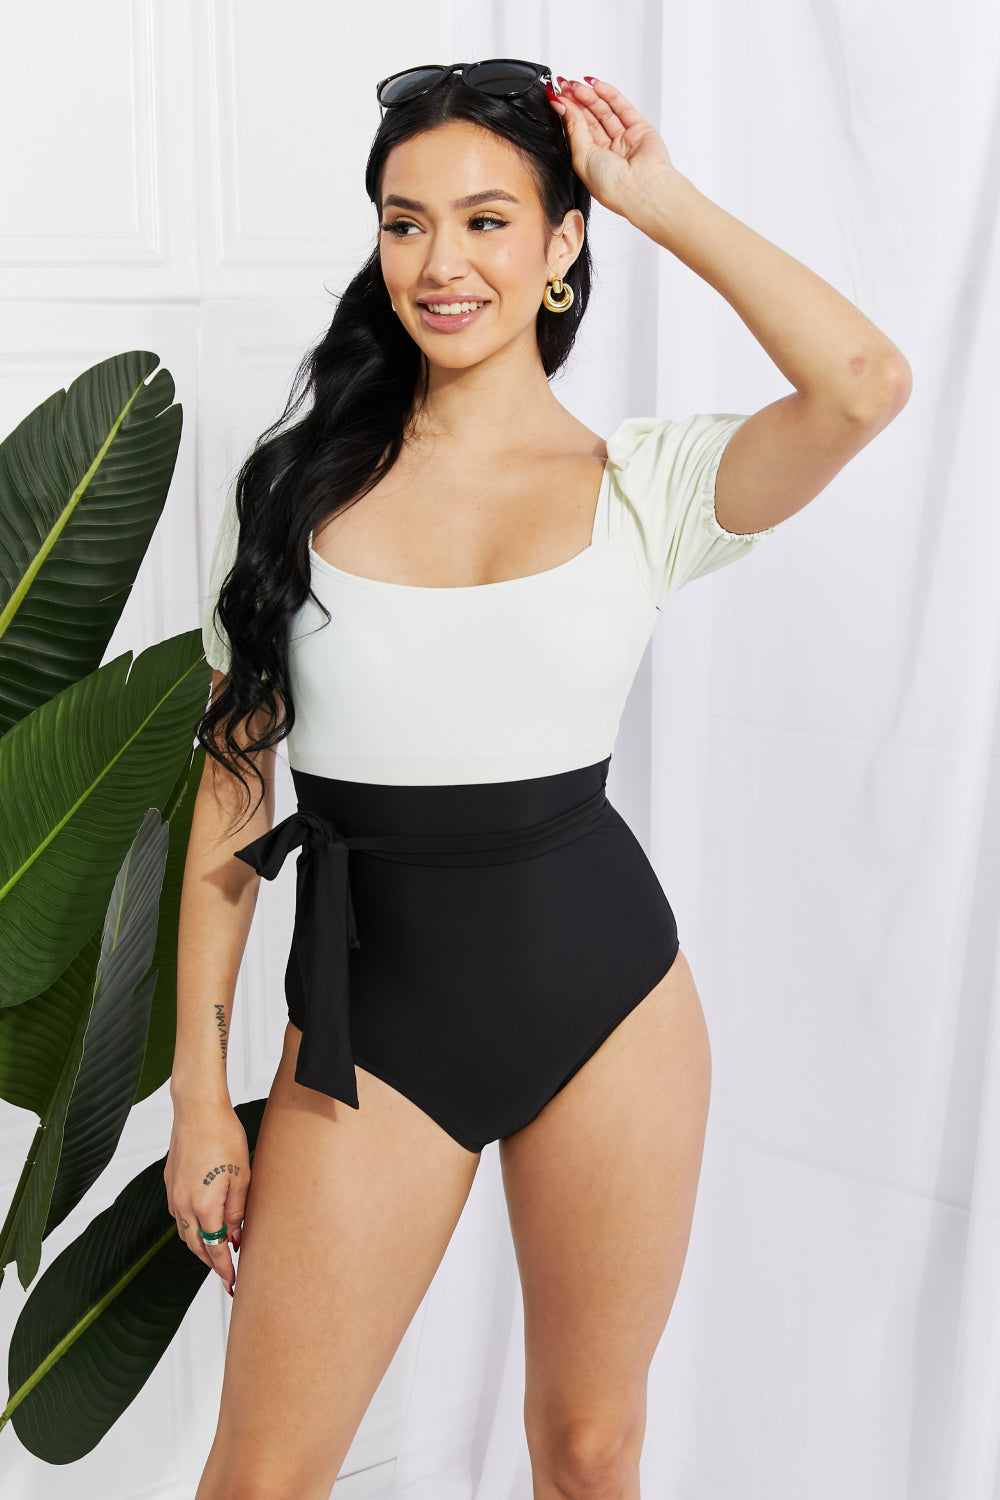 Black Marina West Swim Salty Air Puff Sleeve One-Piece in Cream/Black Swimwear